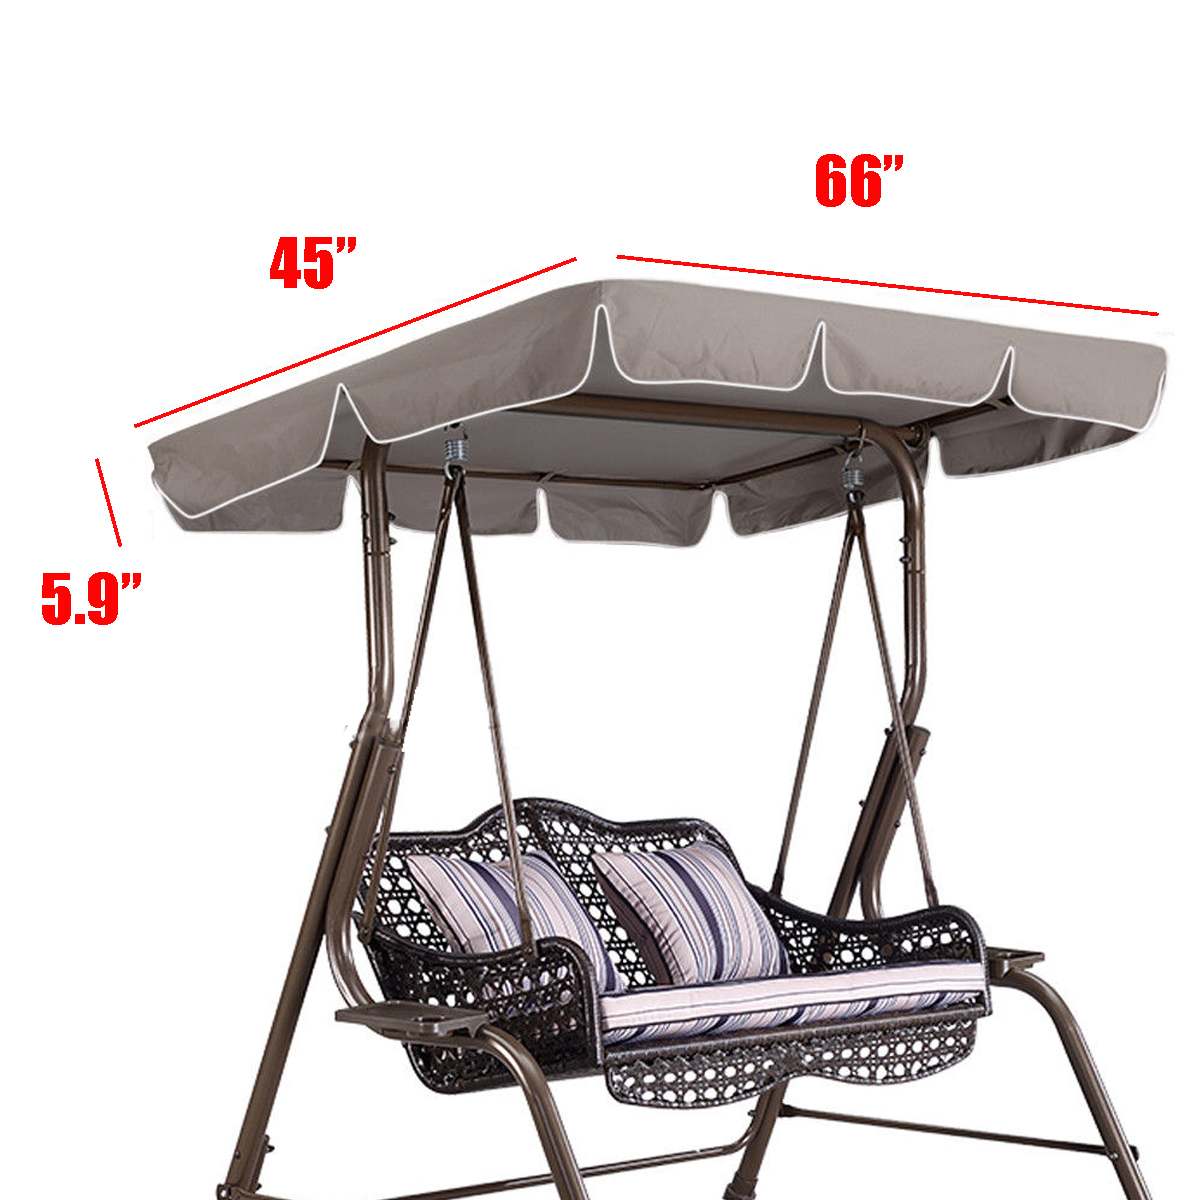 66"X45"X5.9" Garden Swing Awning Canopy Outdoor Gazebo Courtyard Swing Chair Hammock Tent Waterproof Summer Sun Shade Sail